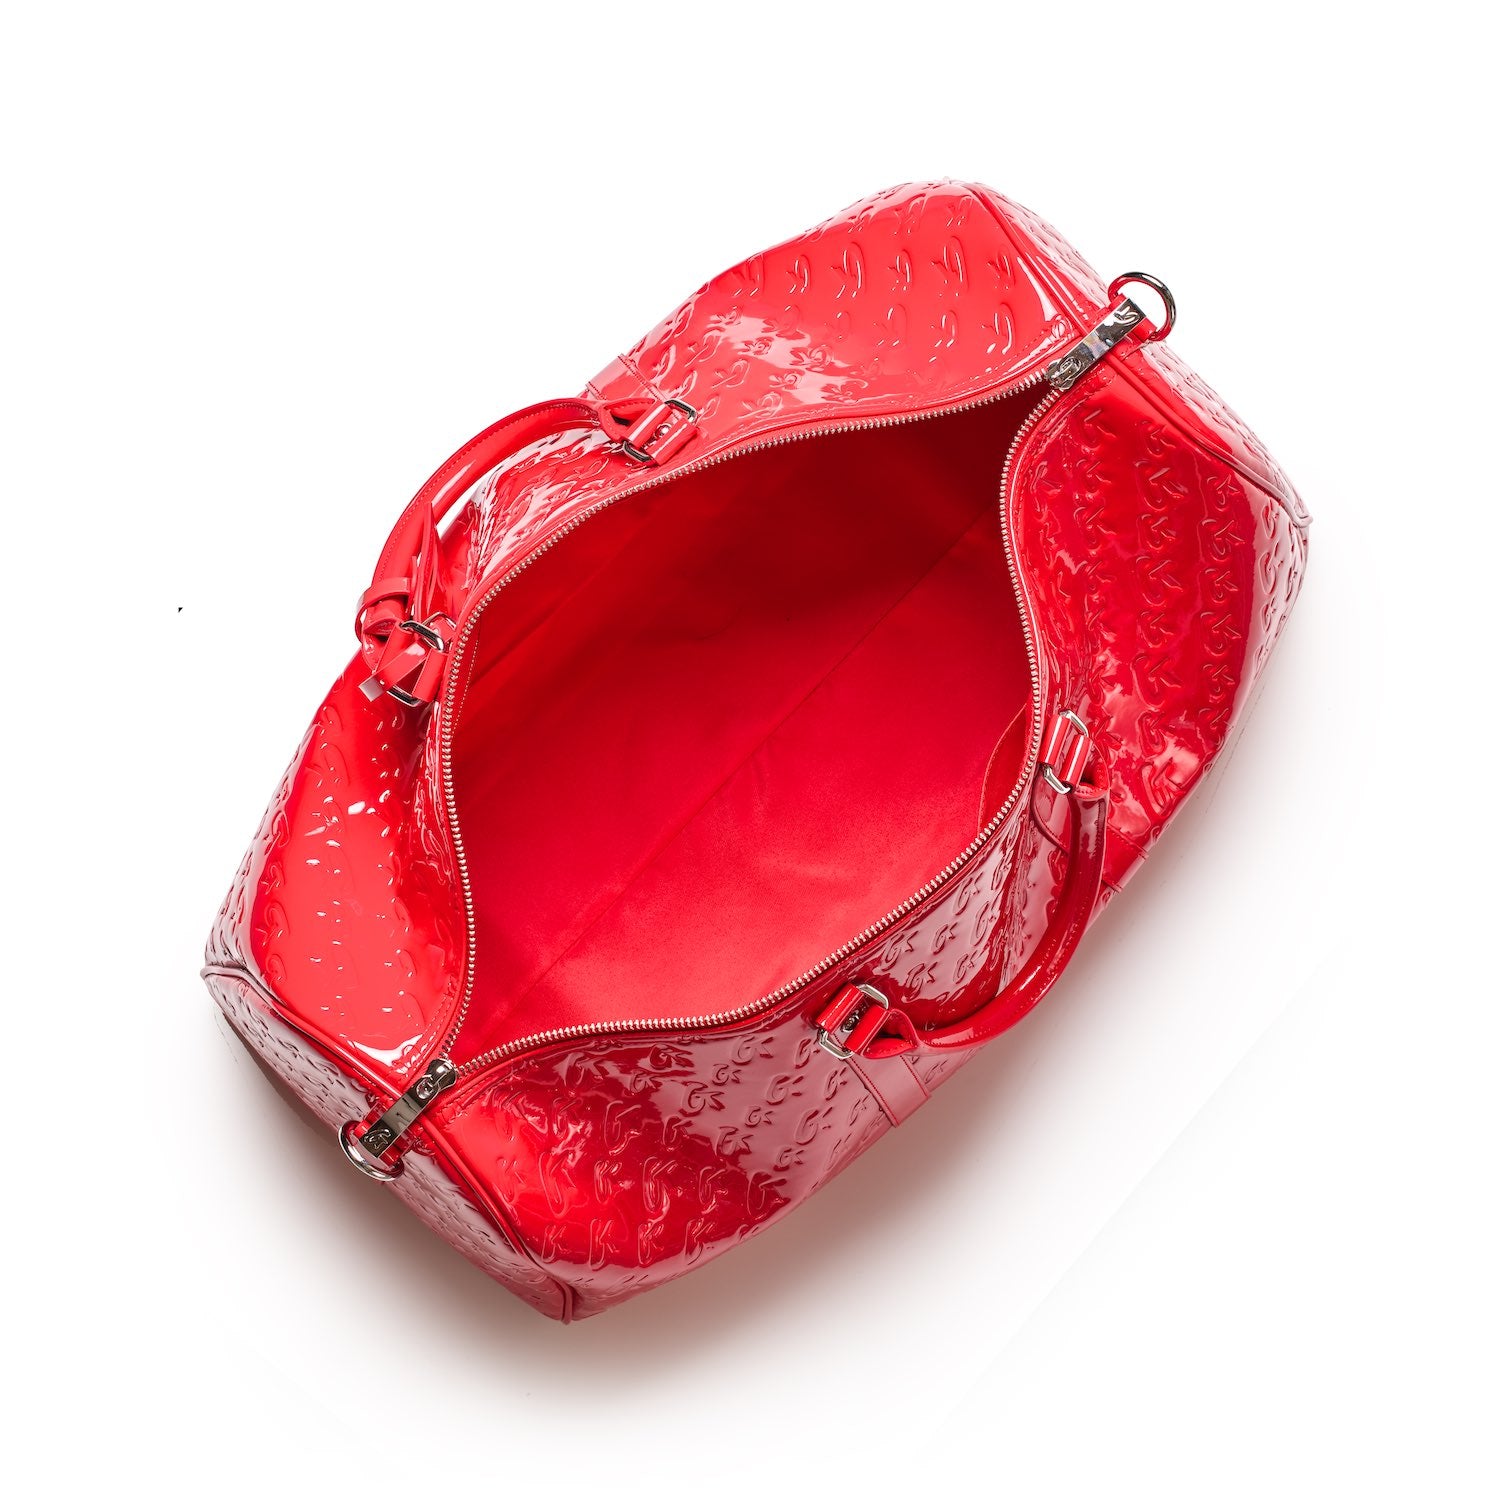 MONOGRAM MINI BUCKET BAG MATTE RED – Glam-Aholic Lifestyle